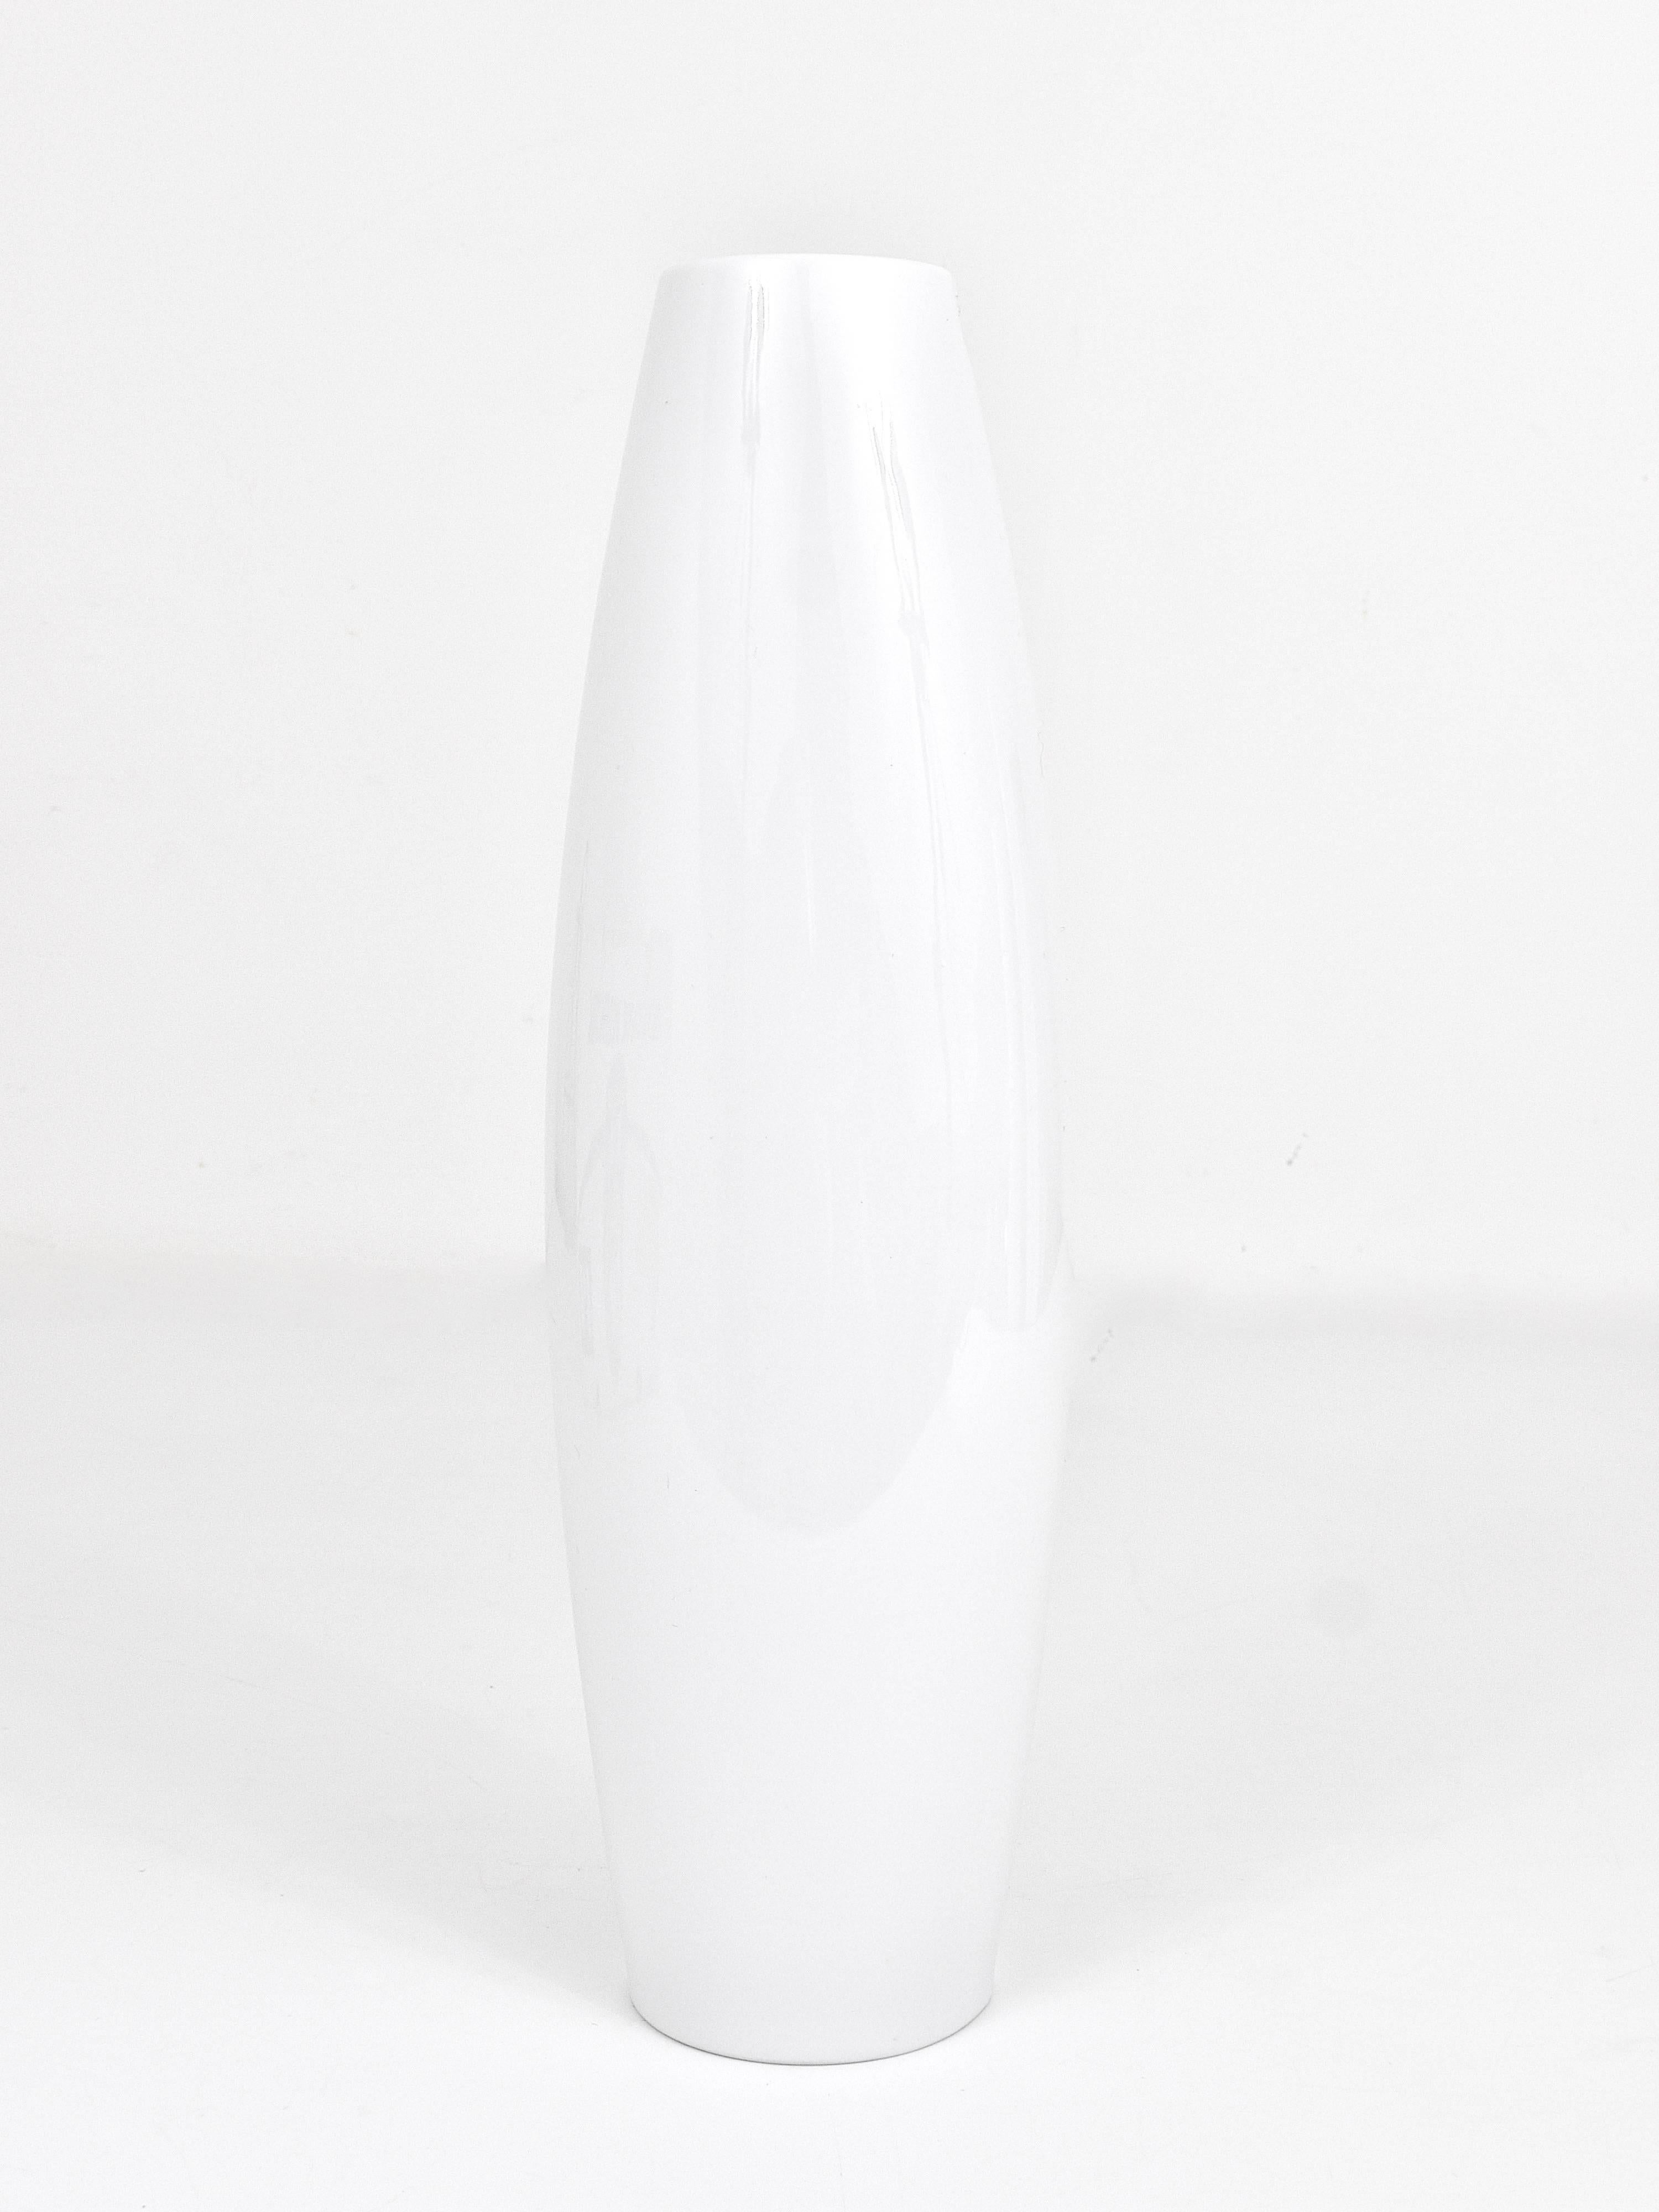 White Relief Op Art Porcelain Vase, Cuno Fischer, Rosenthal Studio-Linie, 1960s In Excellent Condition For Sale In Vienna, AT